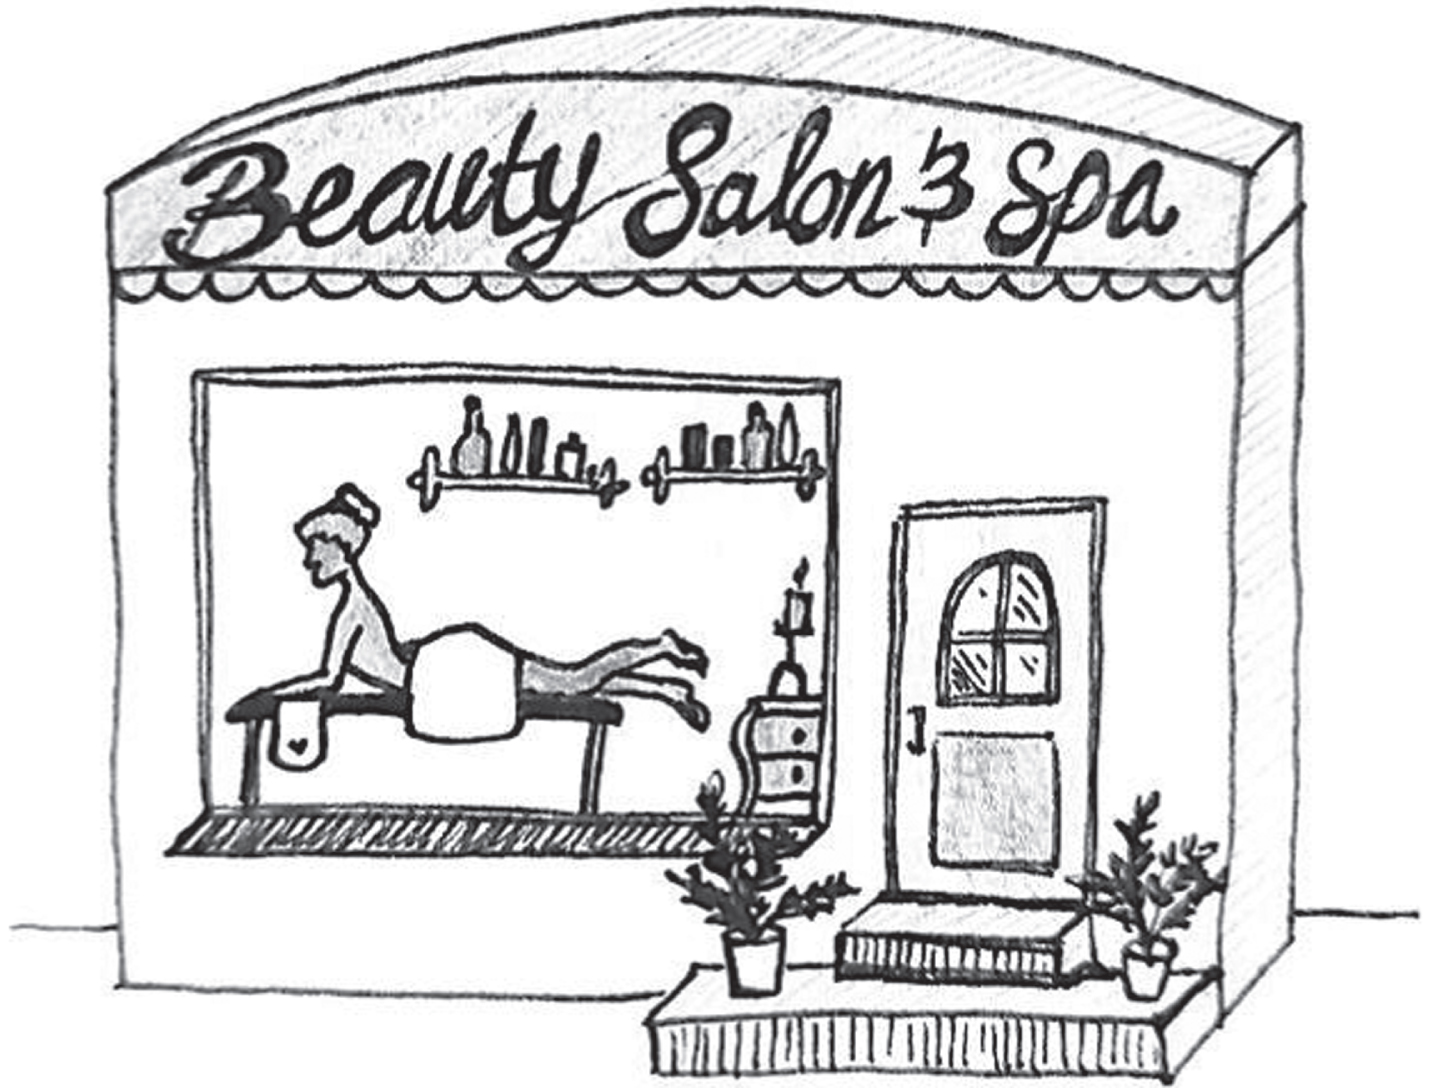 The Beauty Salon.